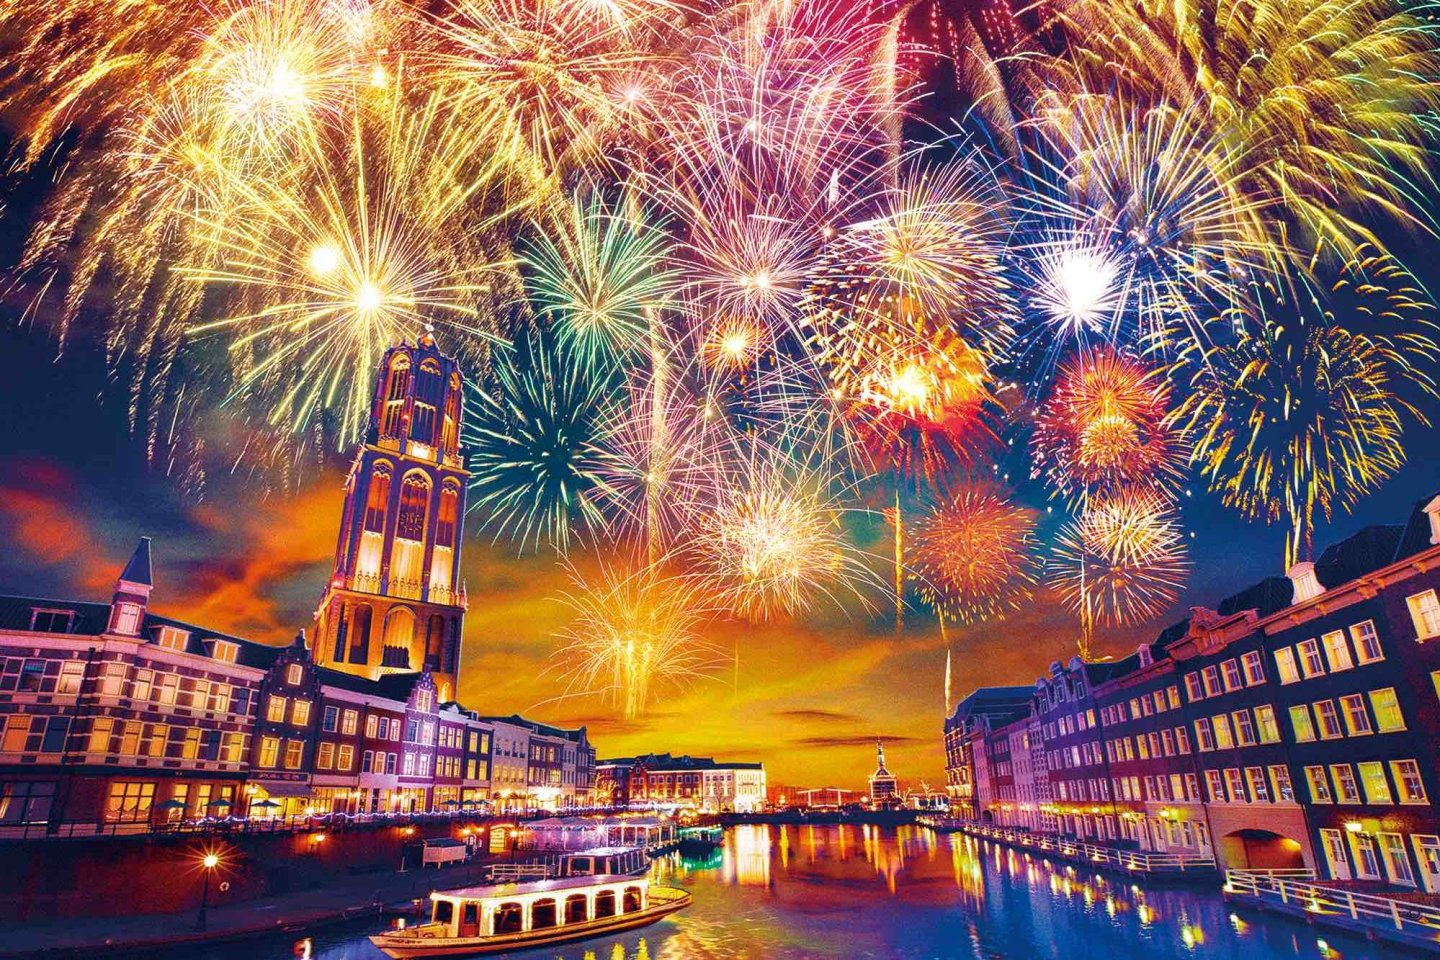 Huis Ten Bosch Fireworks Festival